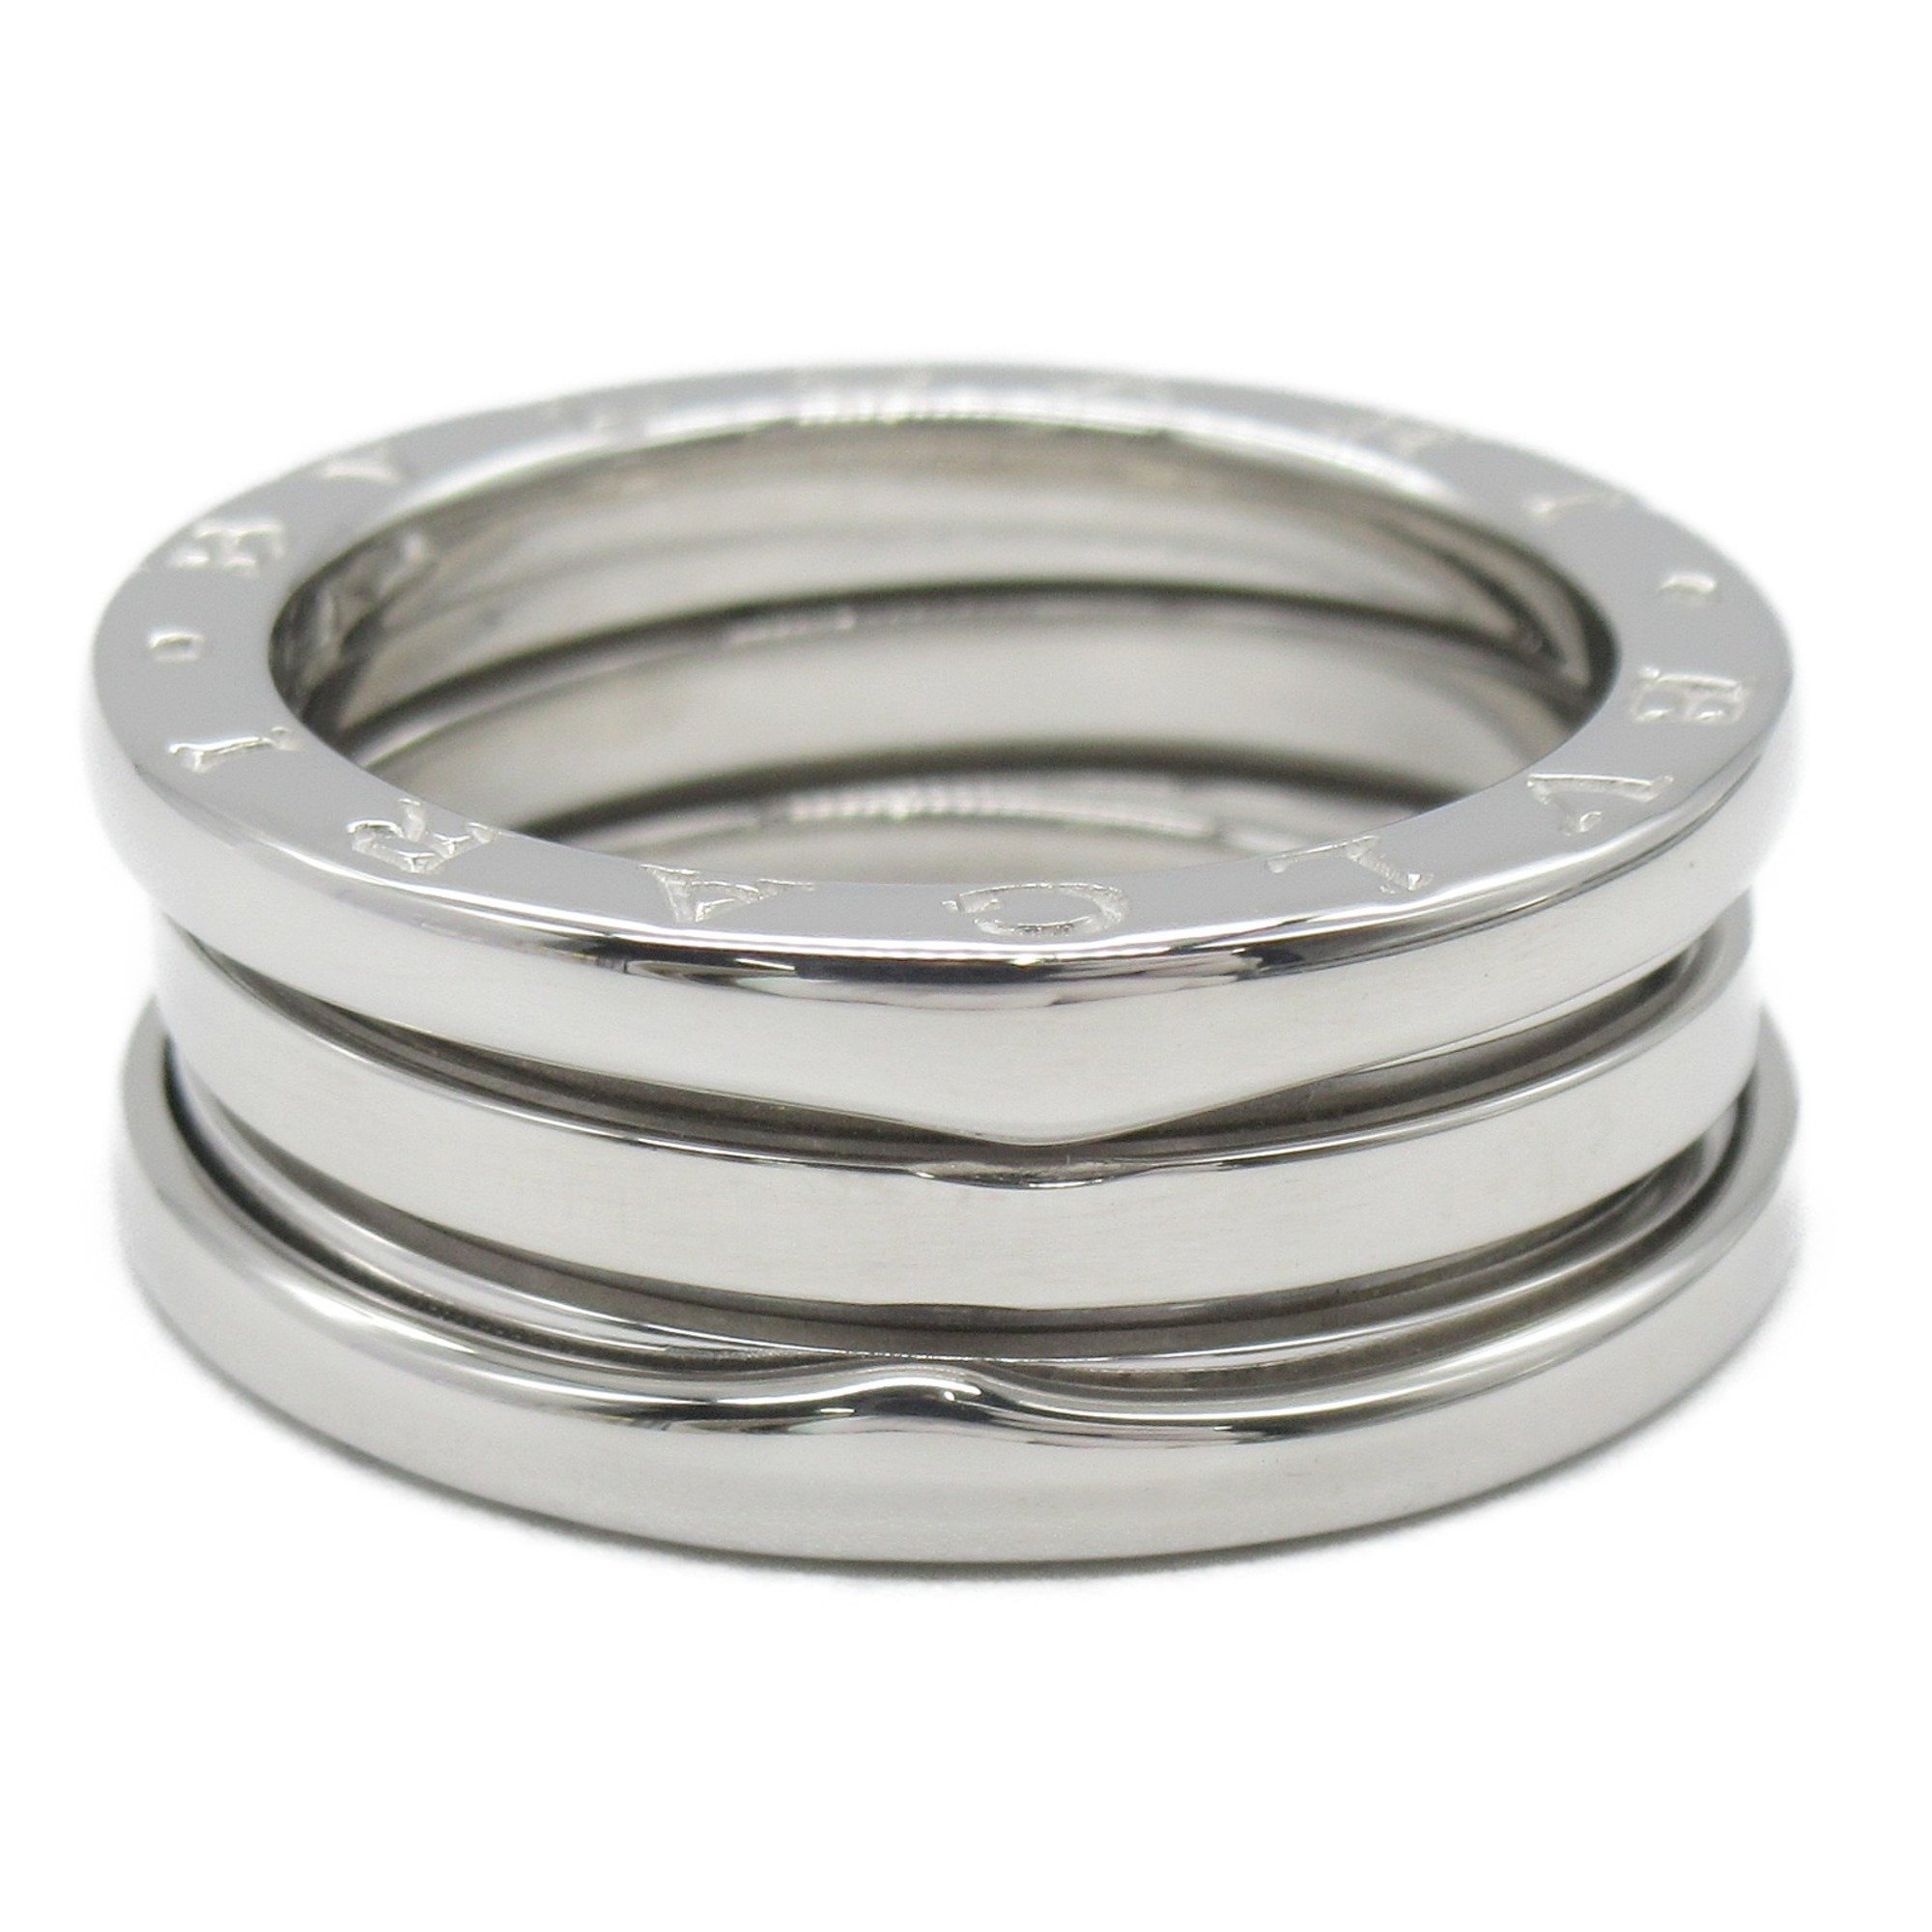 BVLGARI B-zero1 B-zero one 3 band ring Ring Silver  K18WG(WhiteGold) Silver